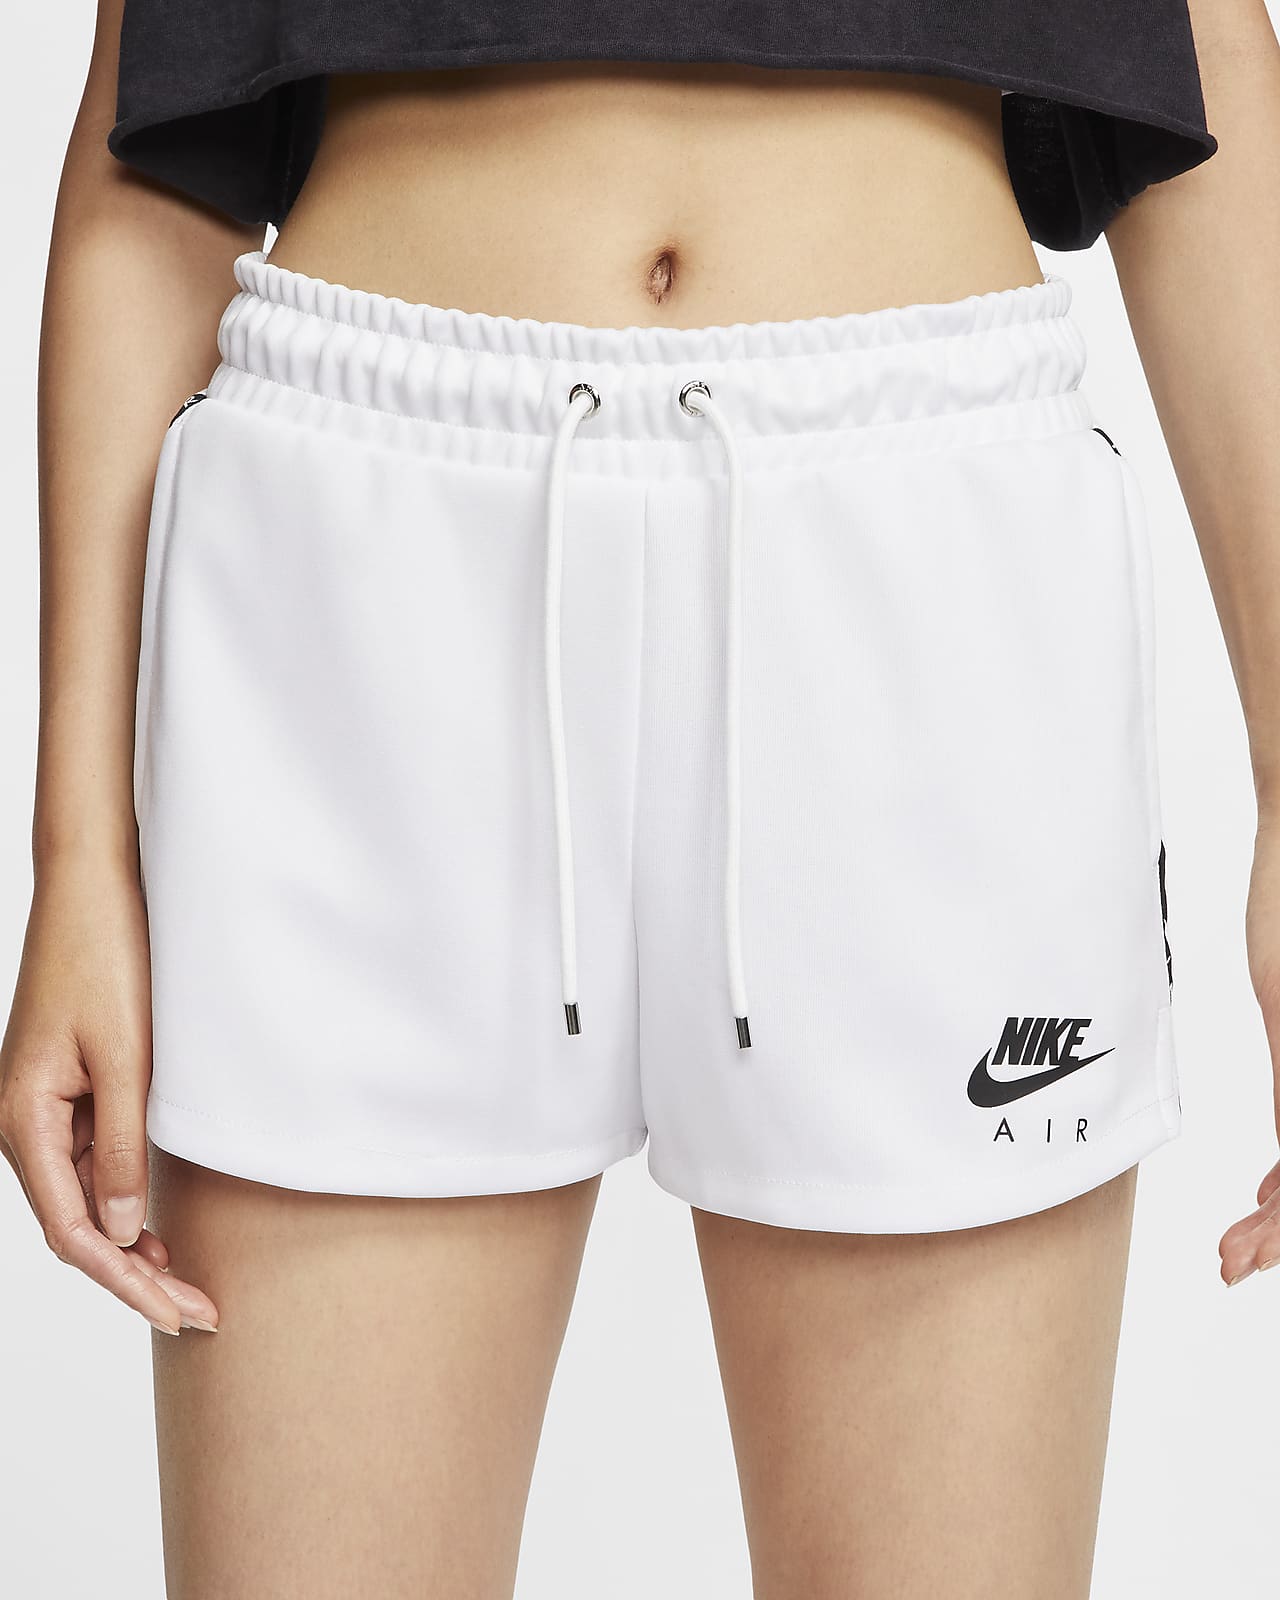 Nike Air Women's Shorts